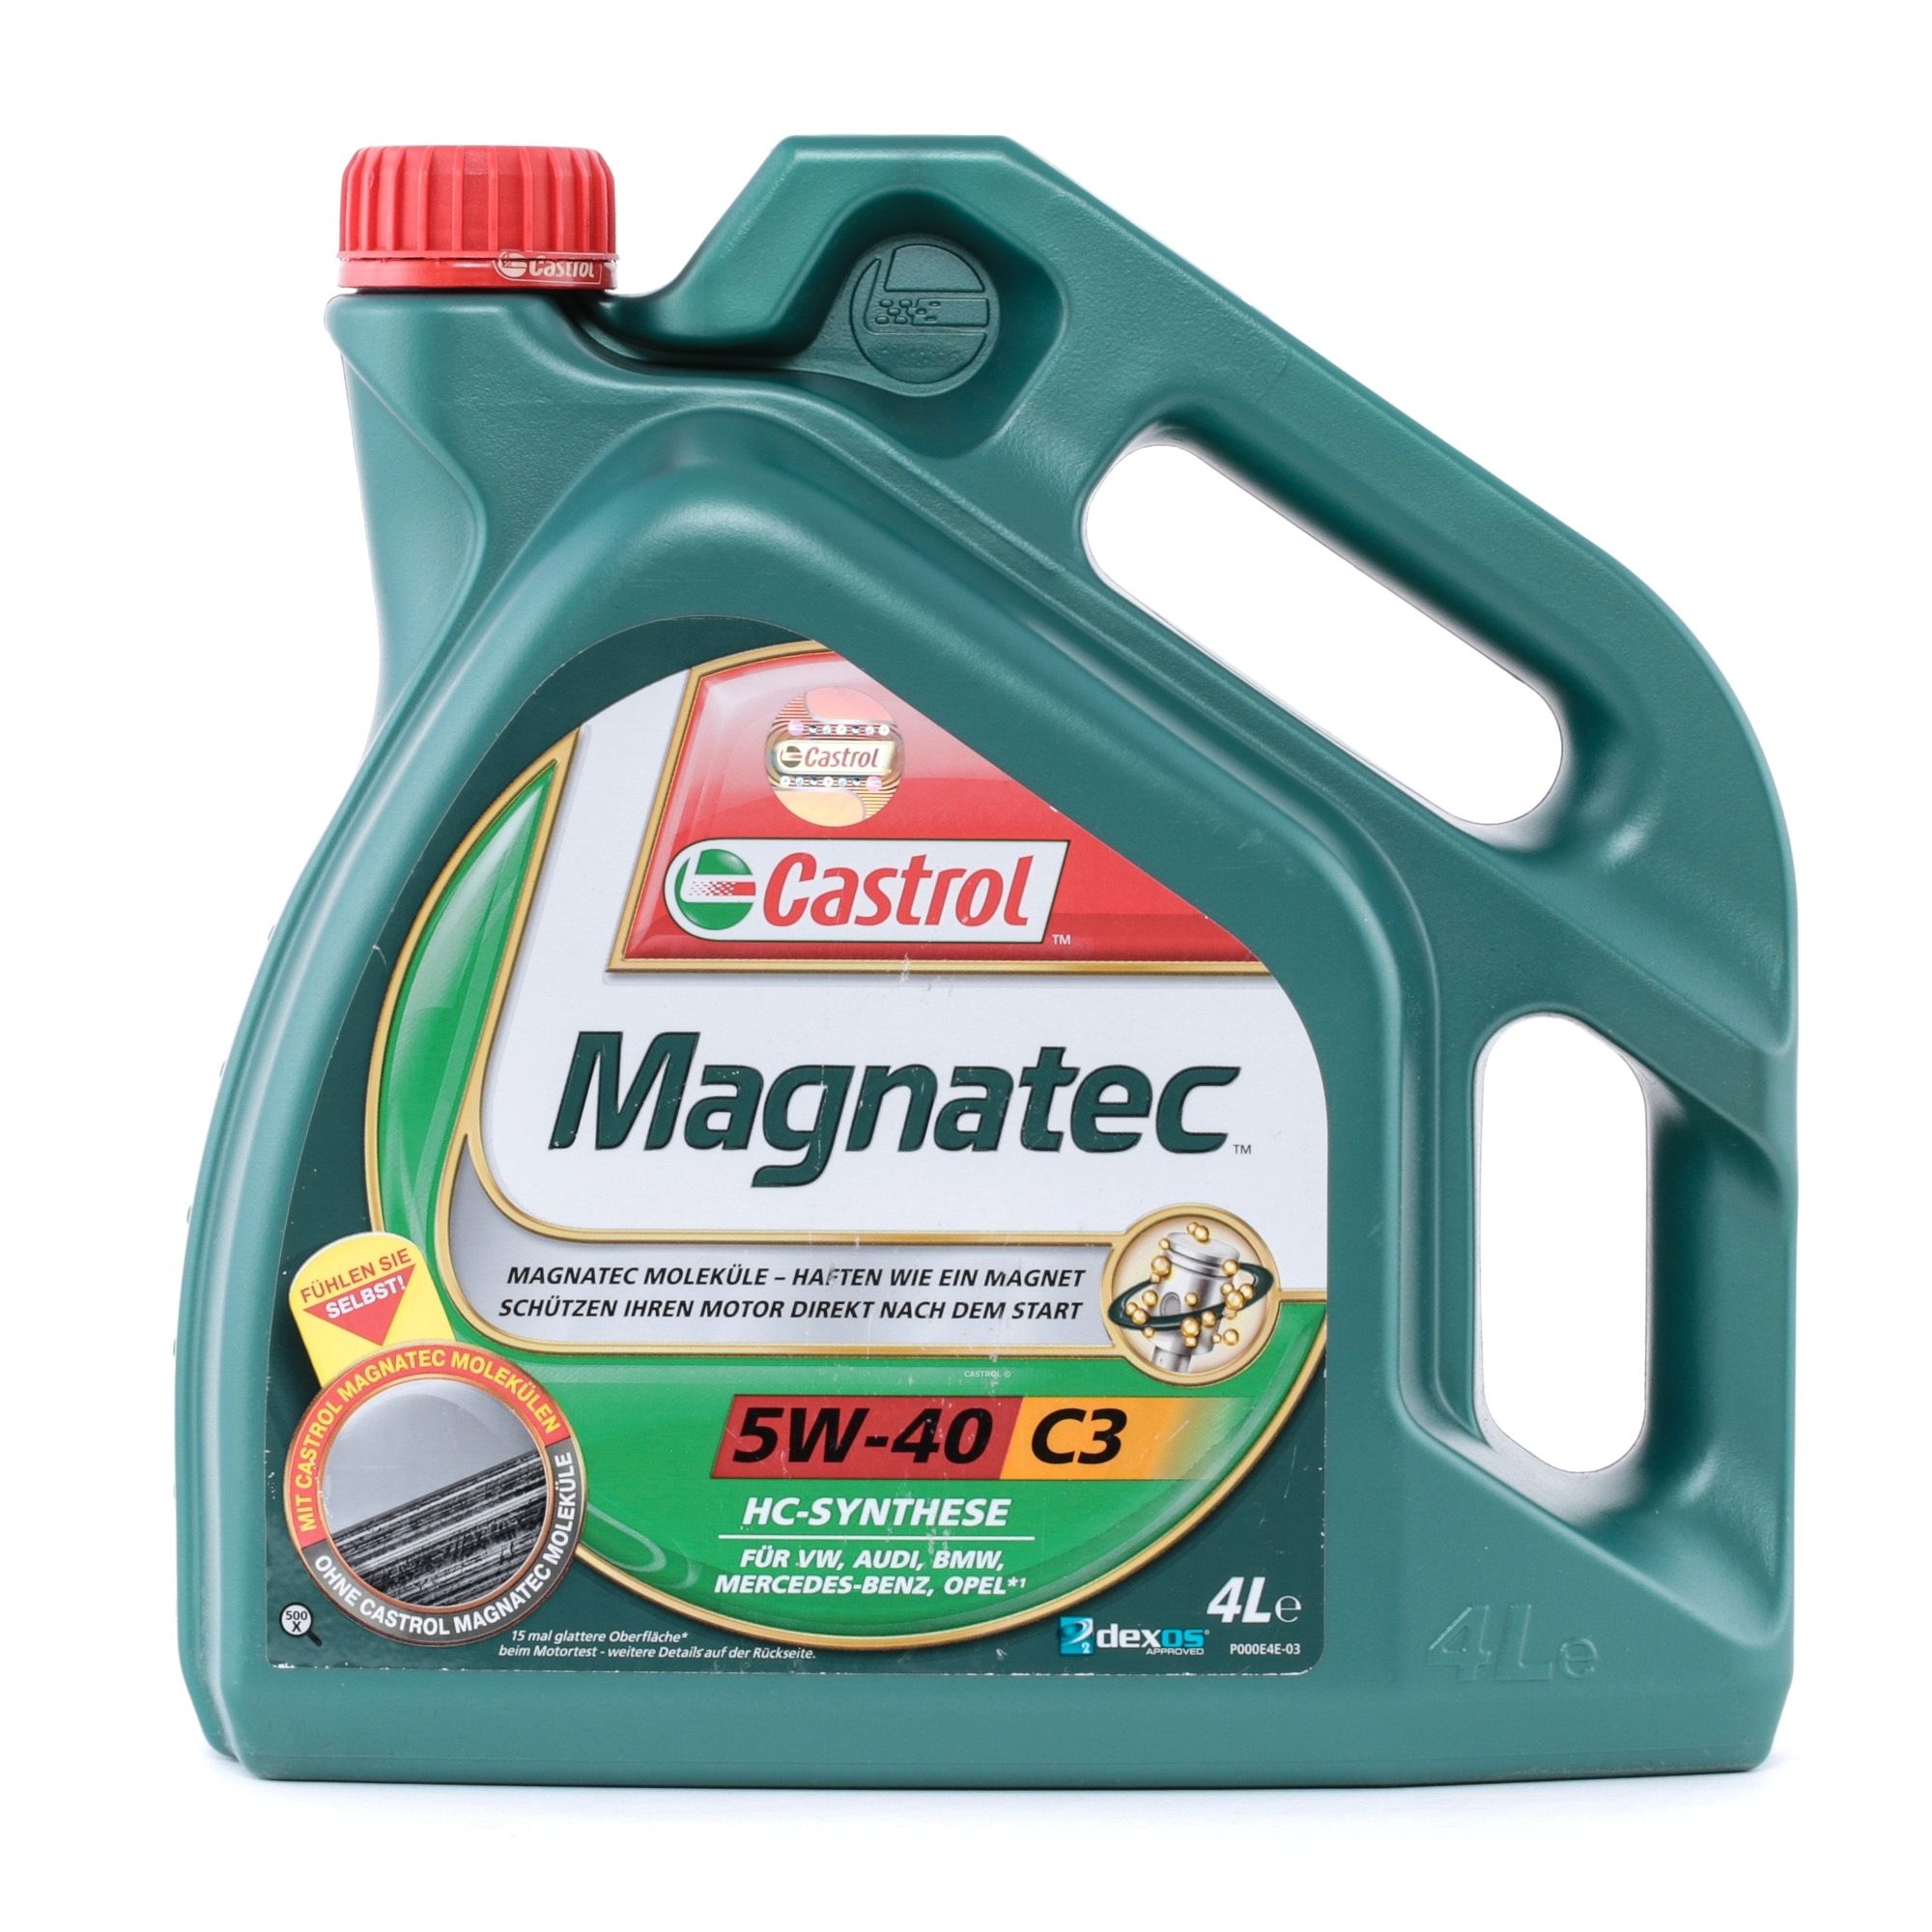 dexos2?* CASTROL Magnatec, C3 5W-40, 4l, Synthetiköl Motoröl 14F9CF günstig kaufen